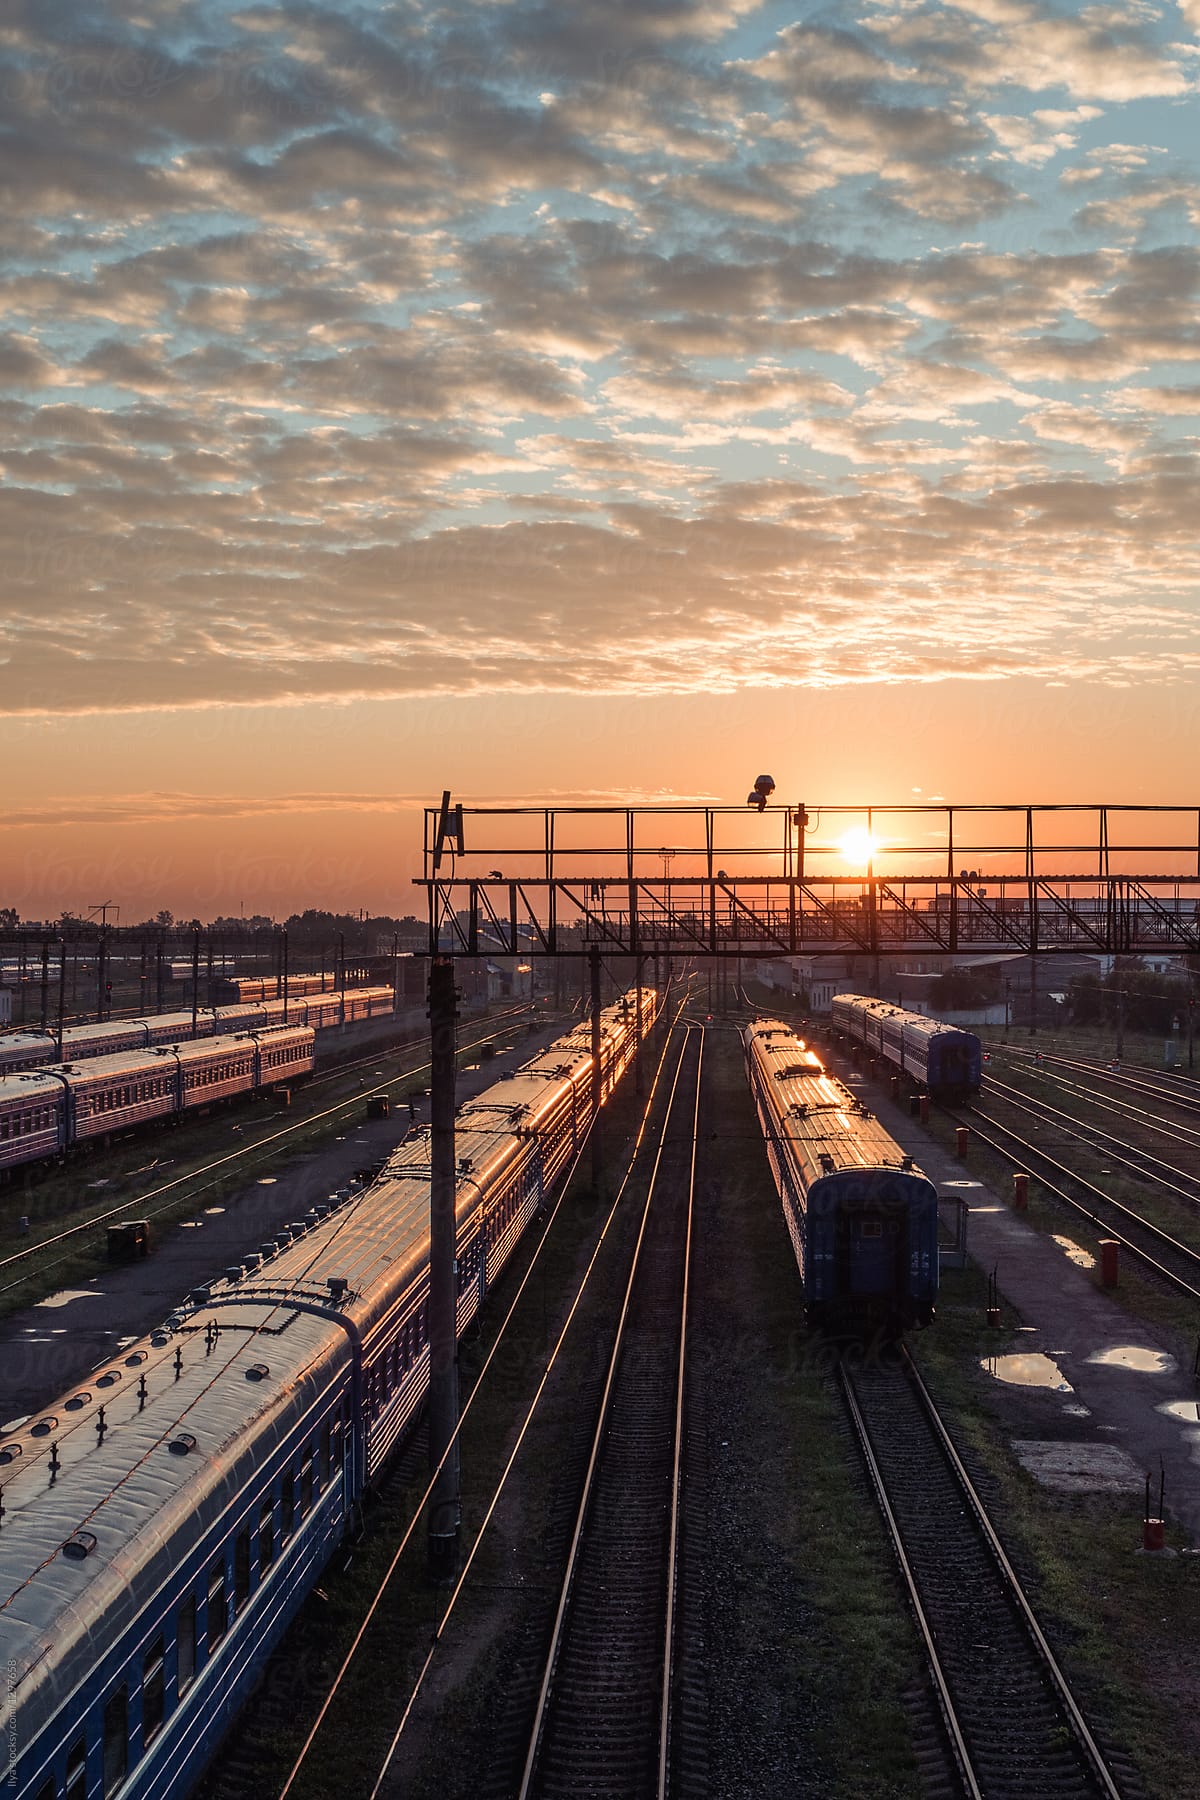 Railway station with trains on sunrise